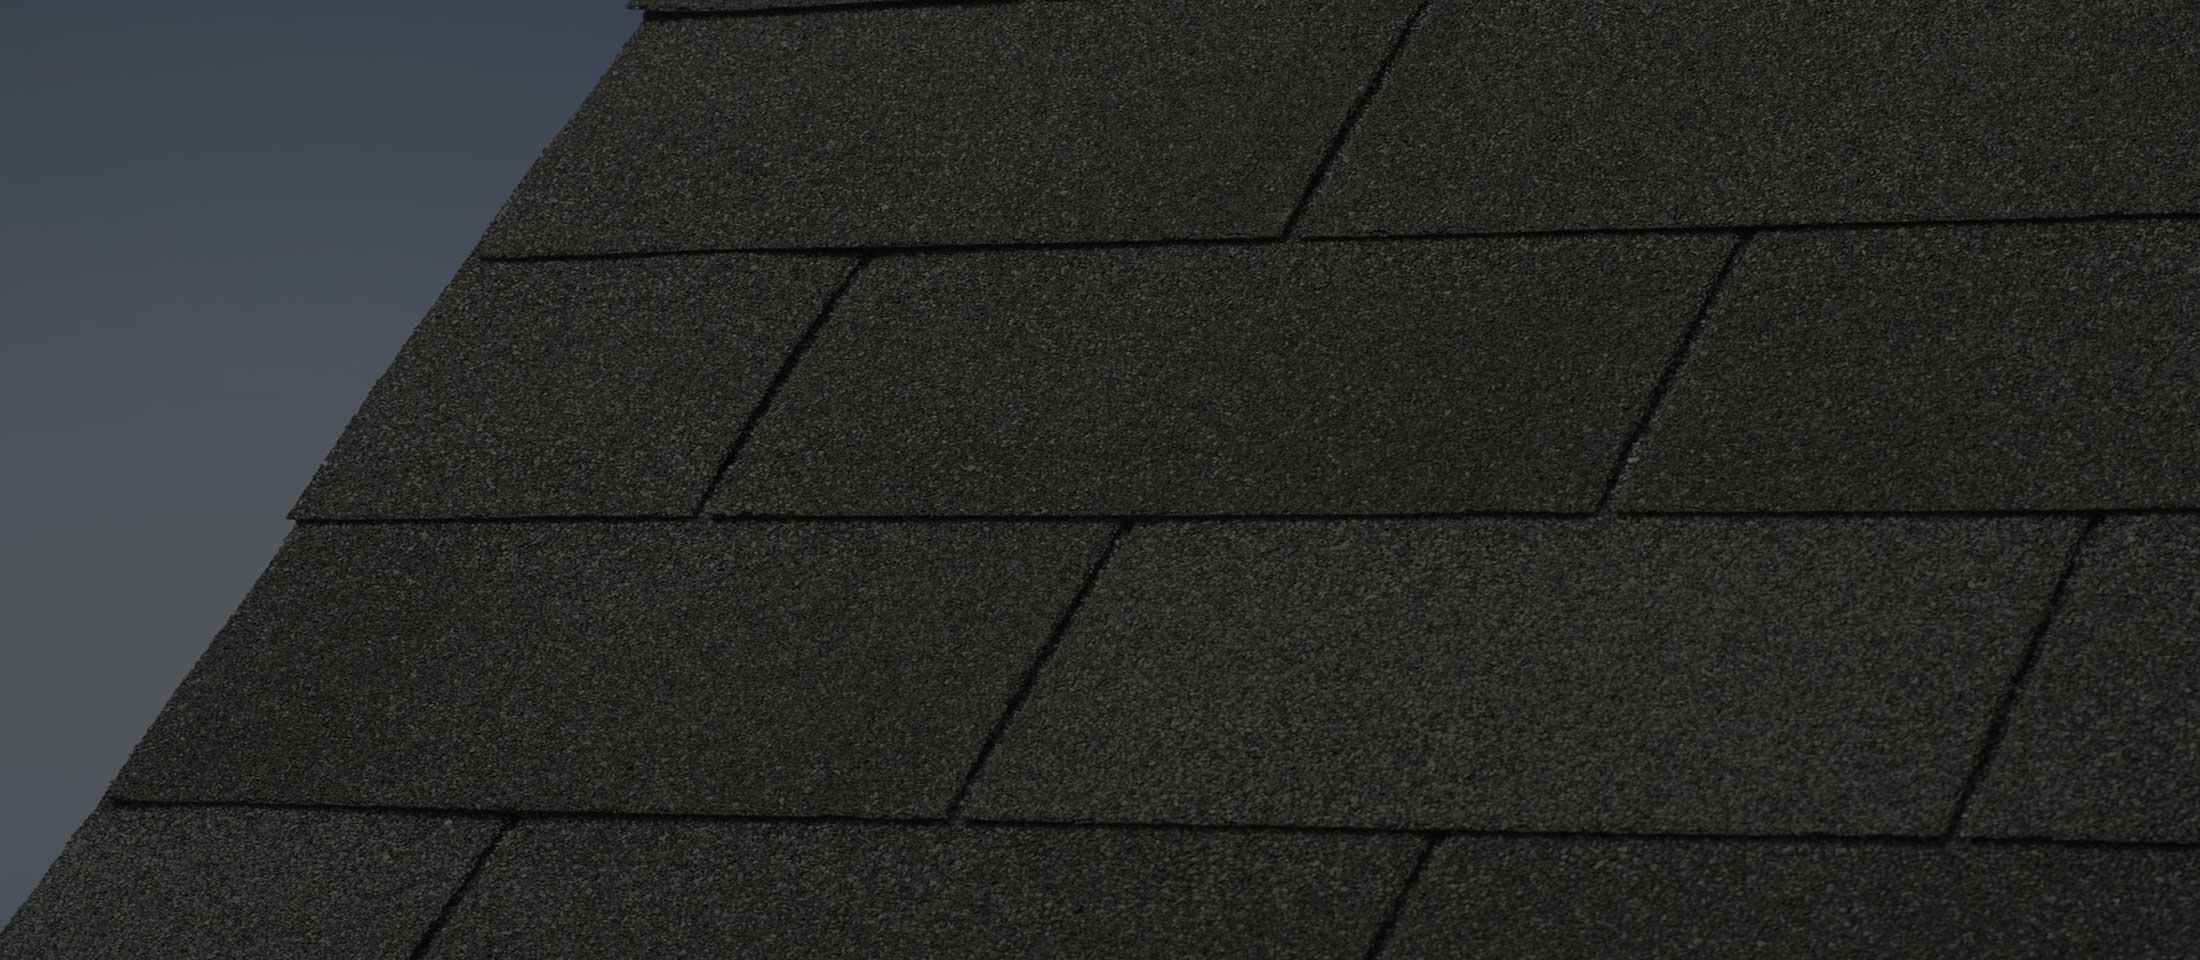 iko background roof design